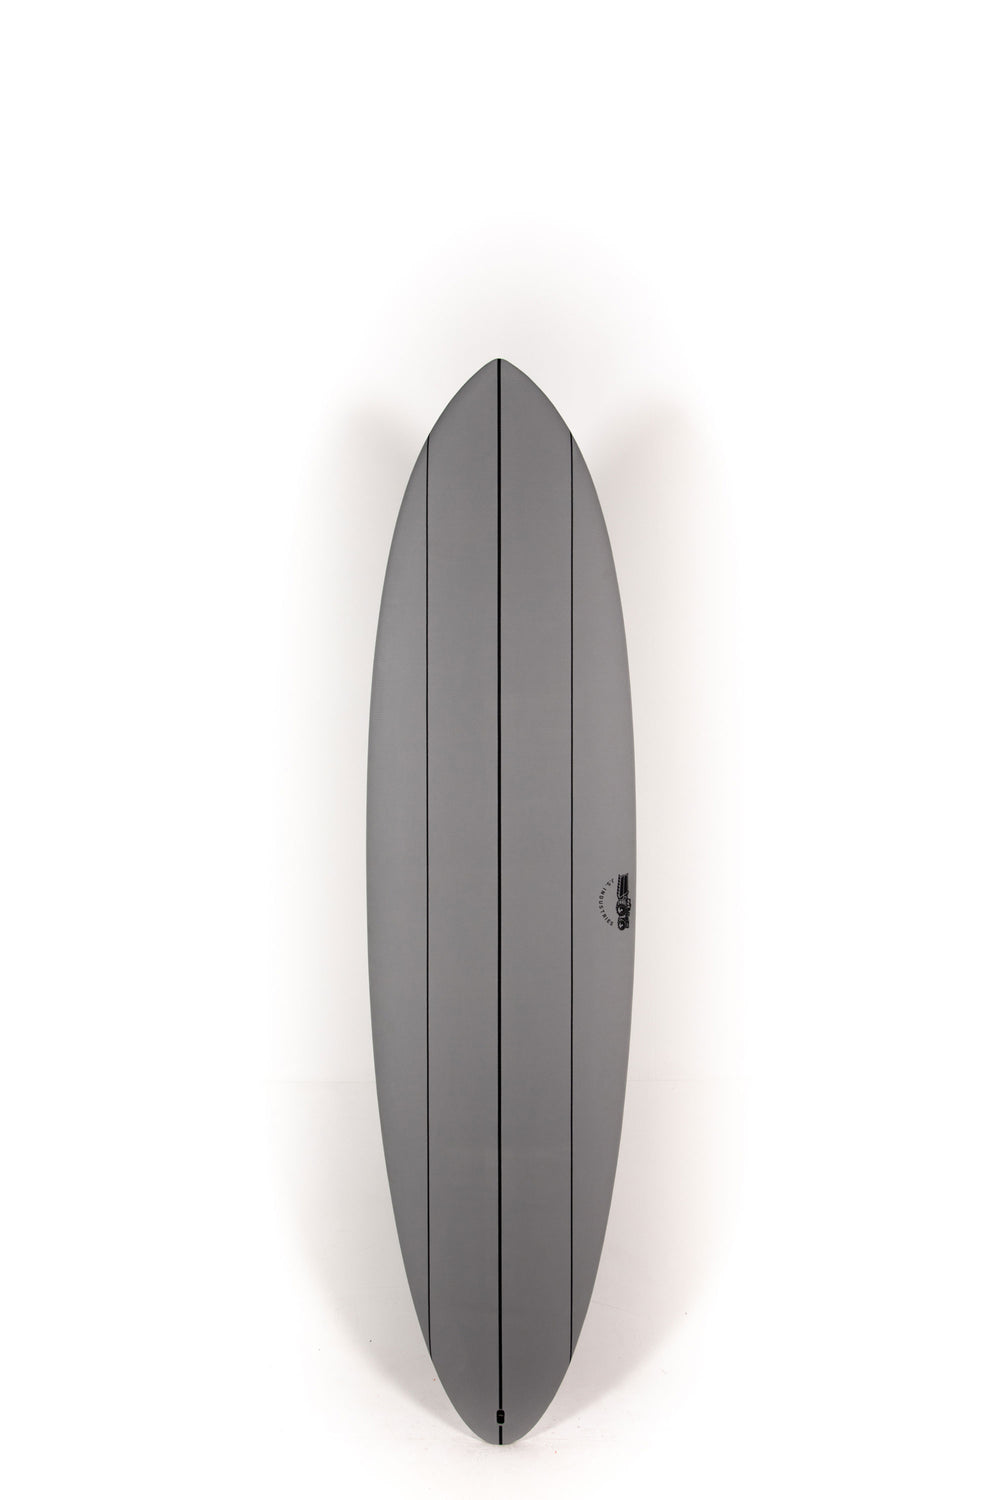 Pukas Surf Shop - JS Surfboards - BIG BARON SOFT - 7'0